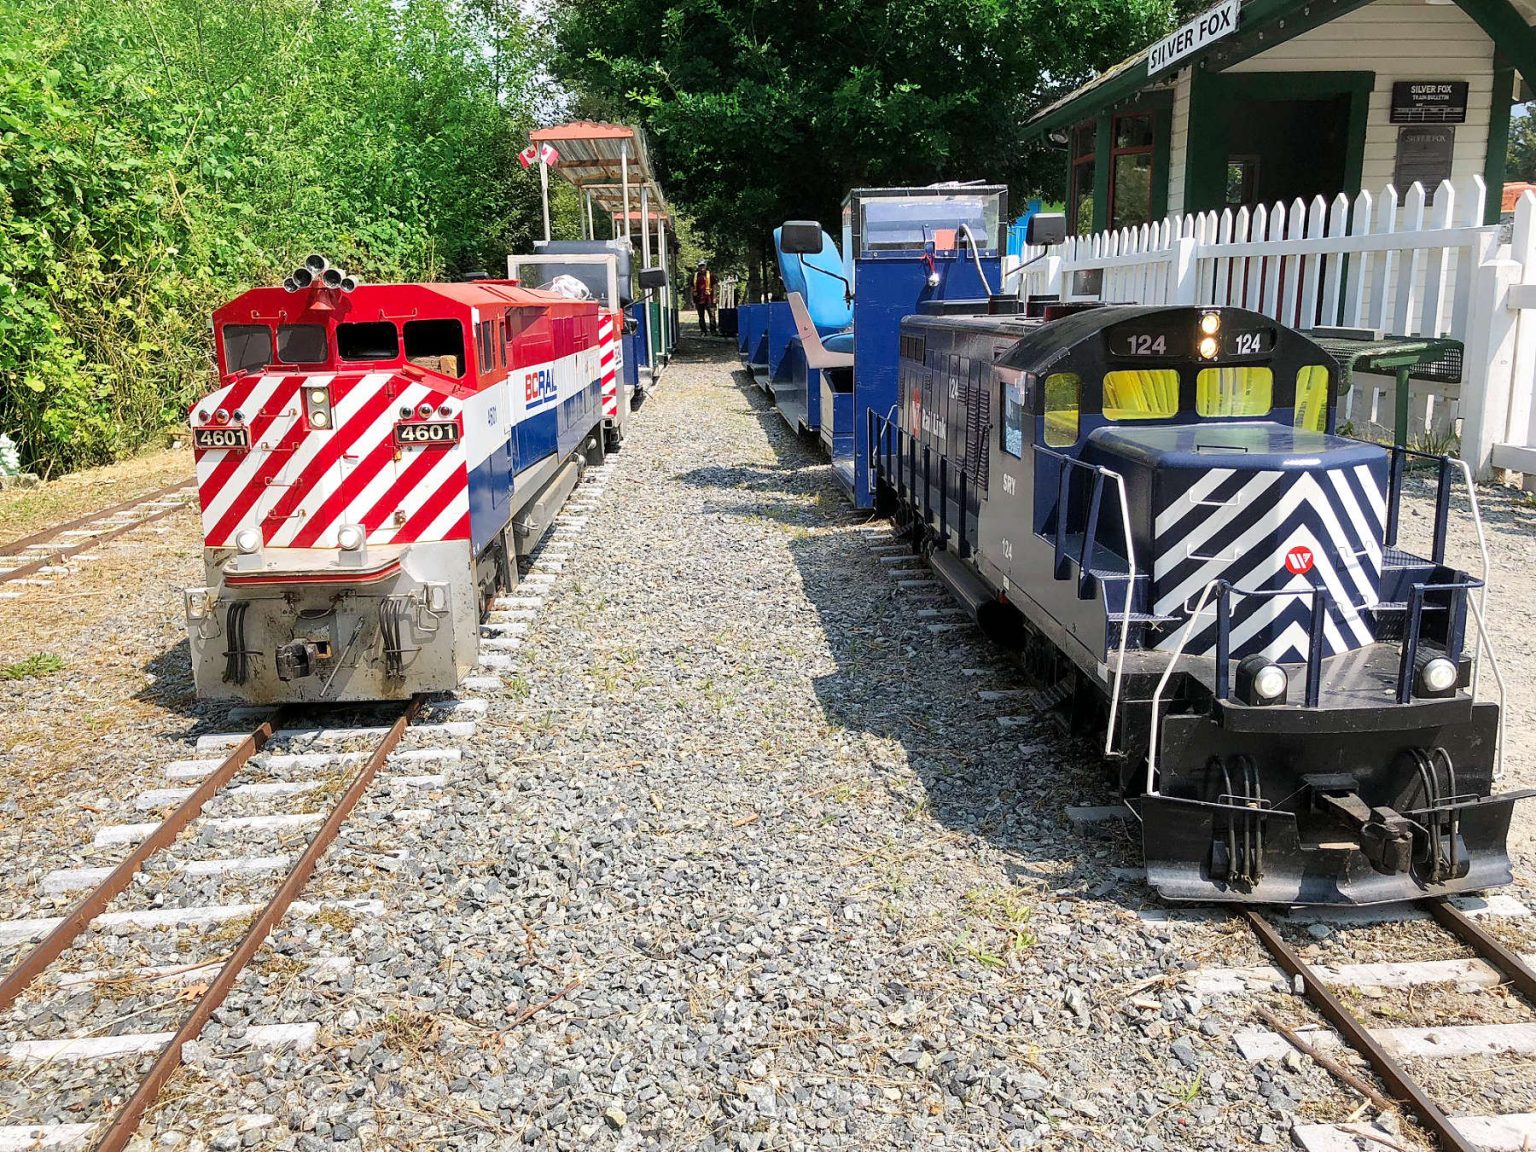 Mini-rail double at Silver Fox